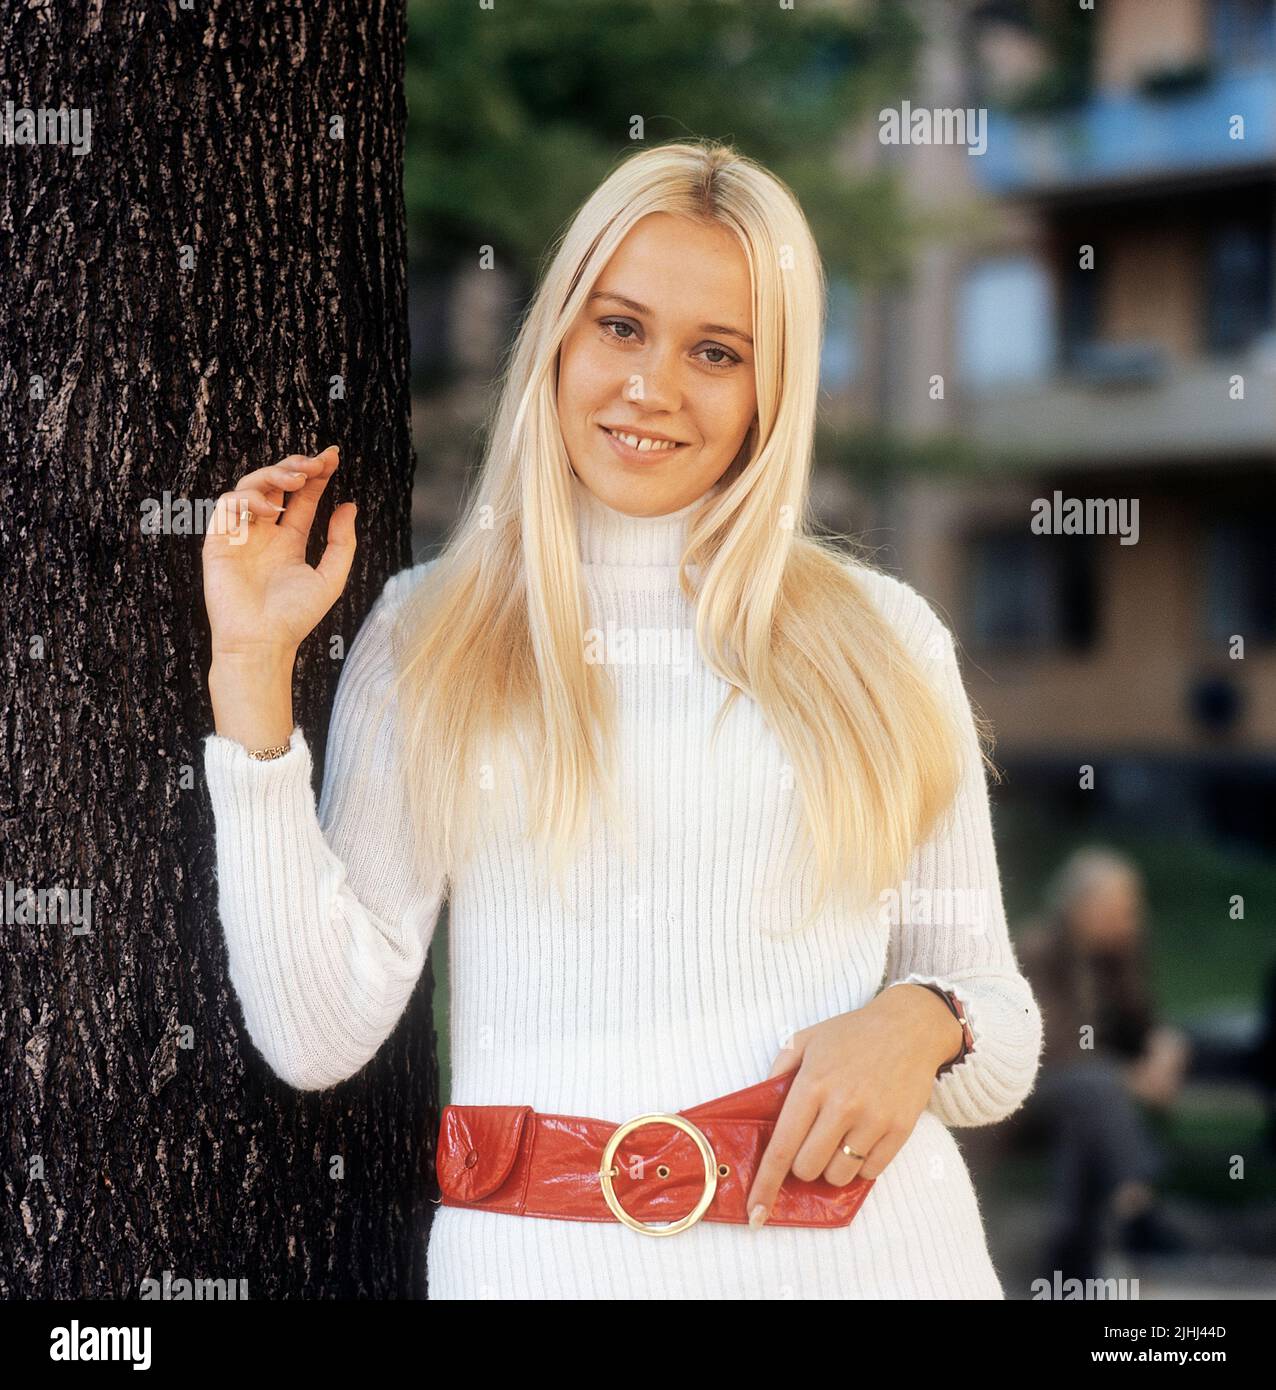 Agnetha Fältskog. Singer. Member of the pop group ABBA. Born 1950. Pictured here 1970. Stock Photo